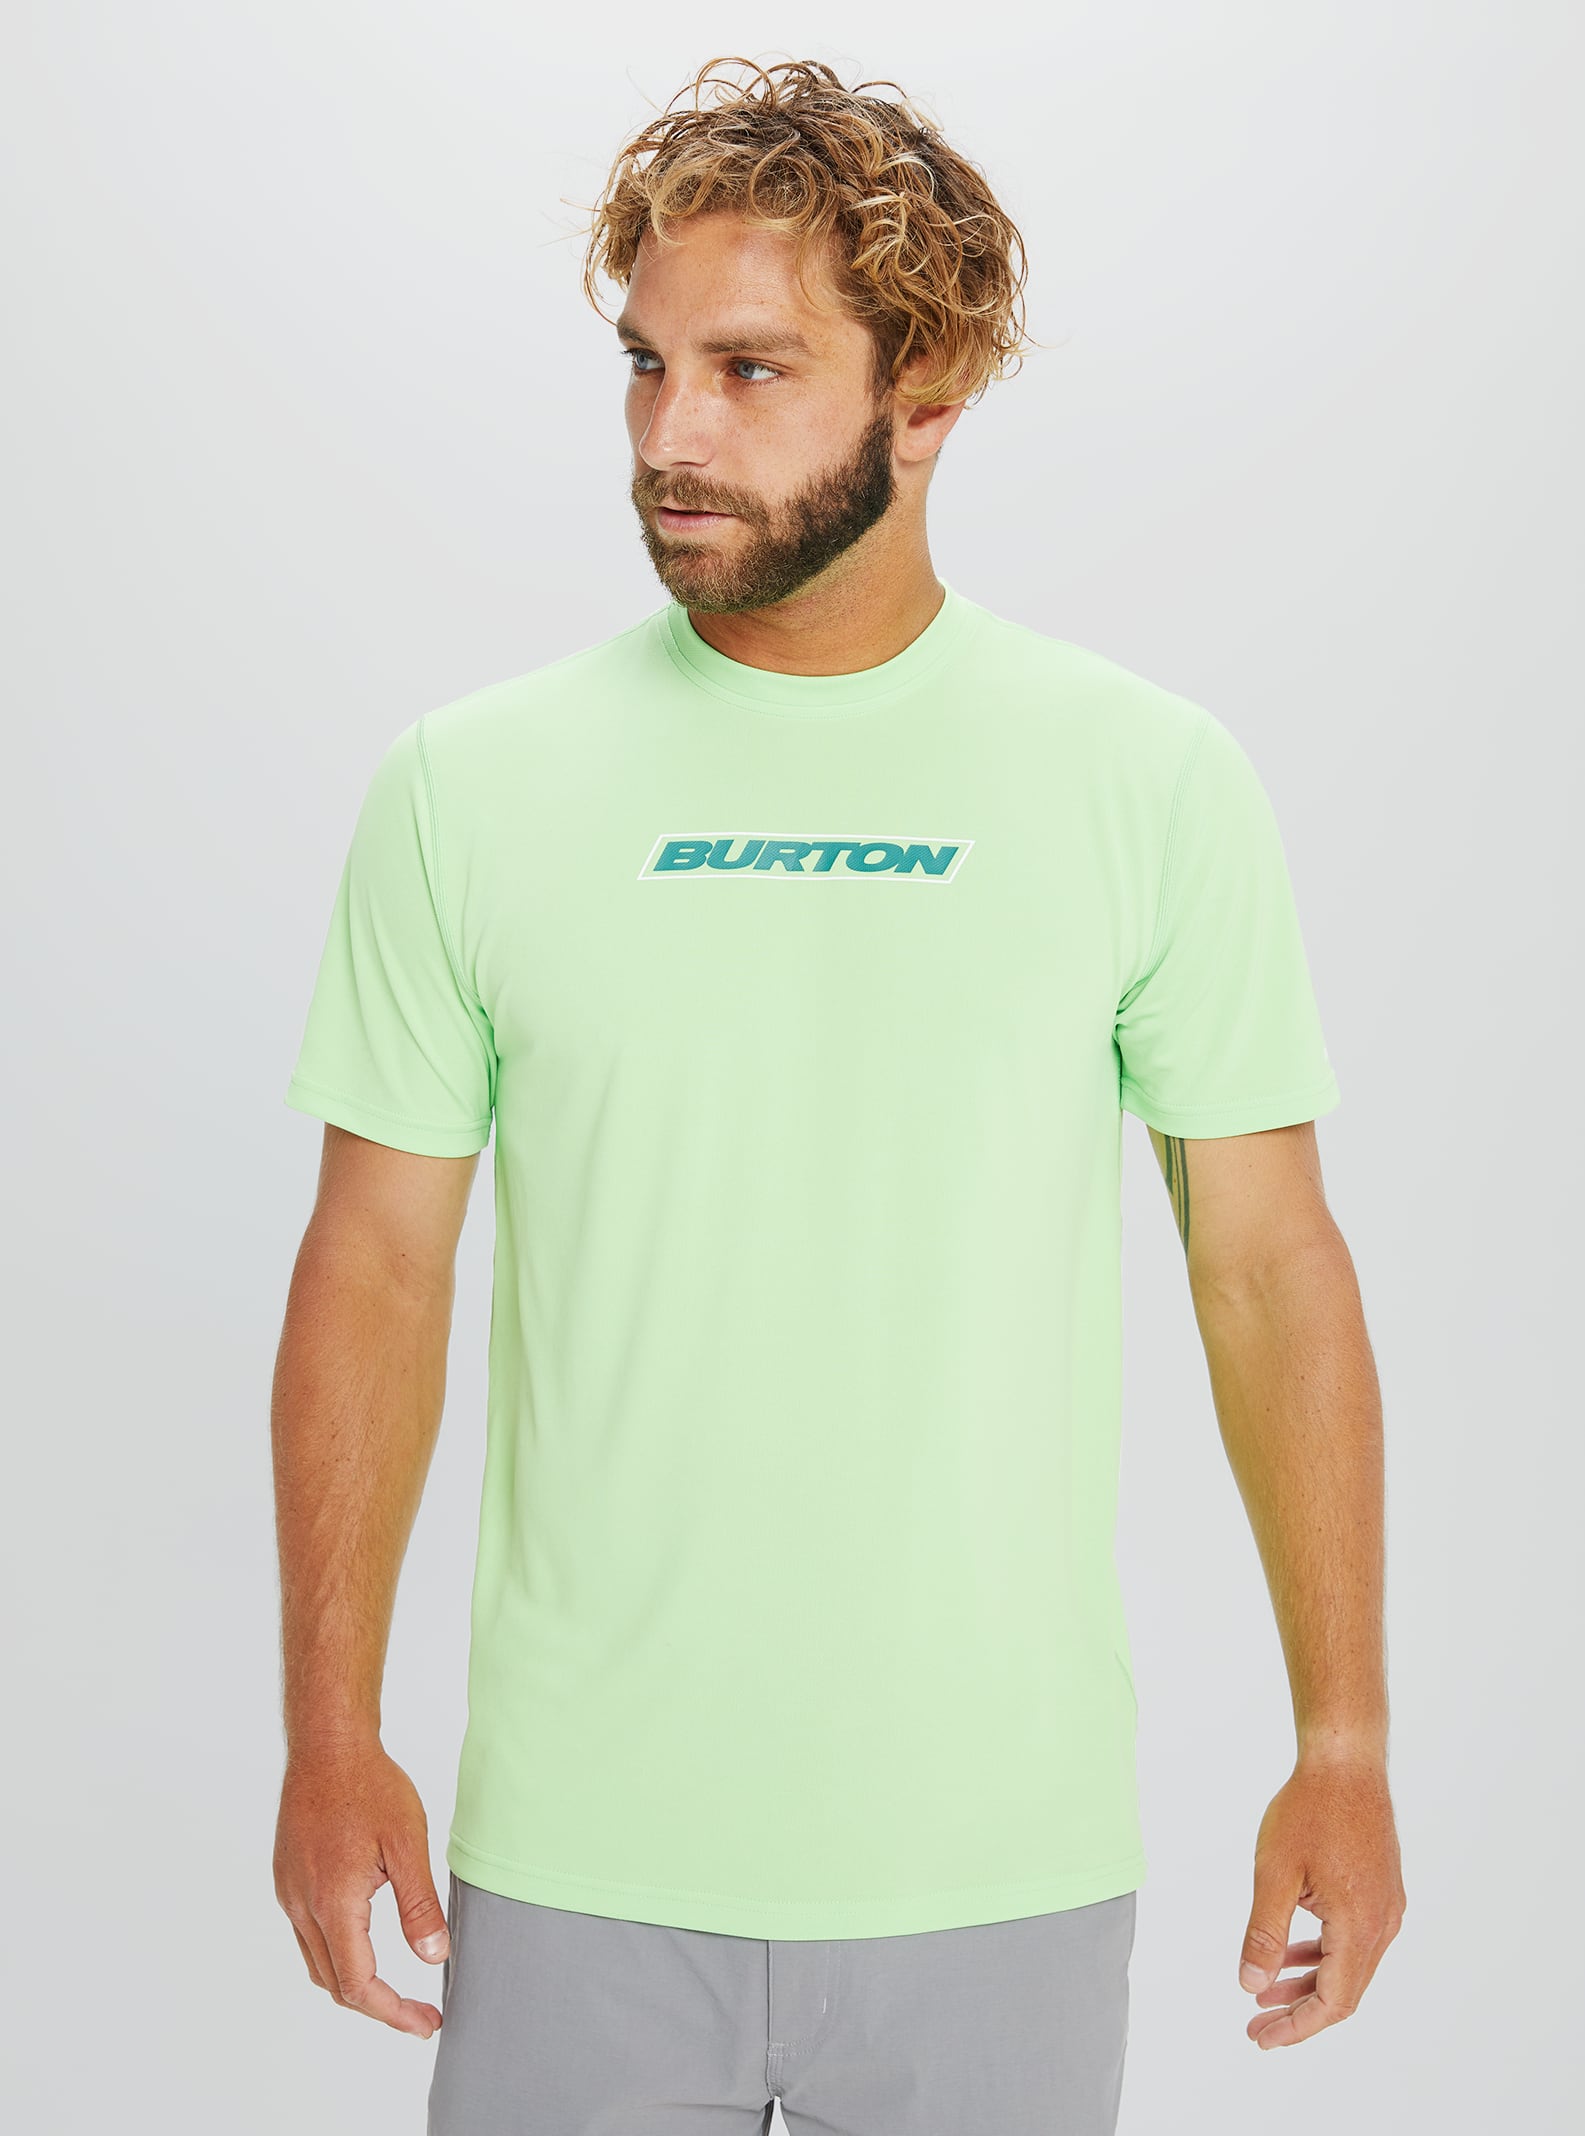 Burton Snowboard T Shirts Cheap Sale, SAVE 40% -  loutzenhiserfuneralhomes.com